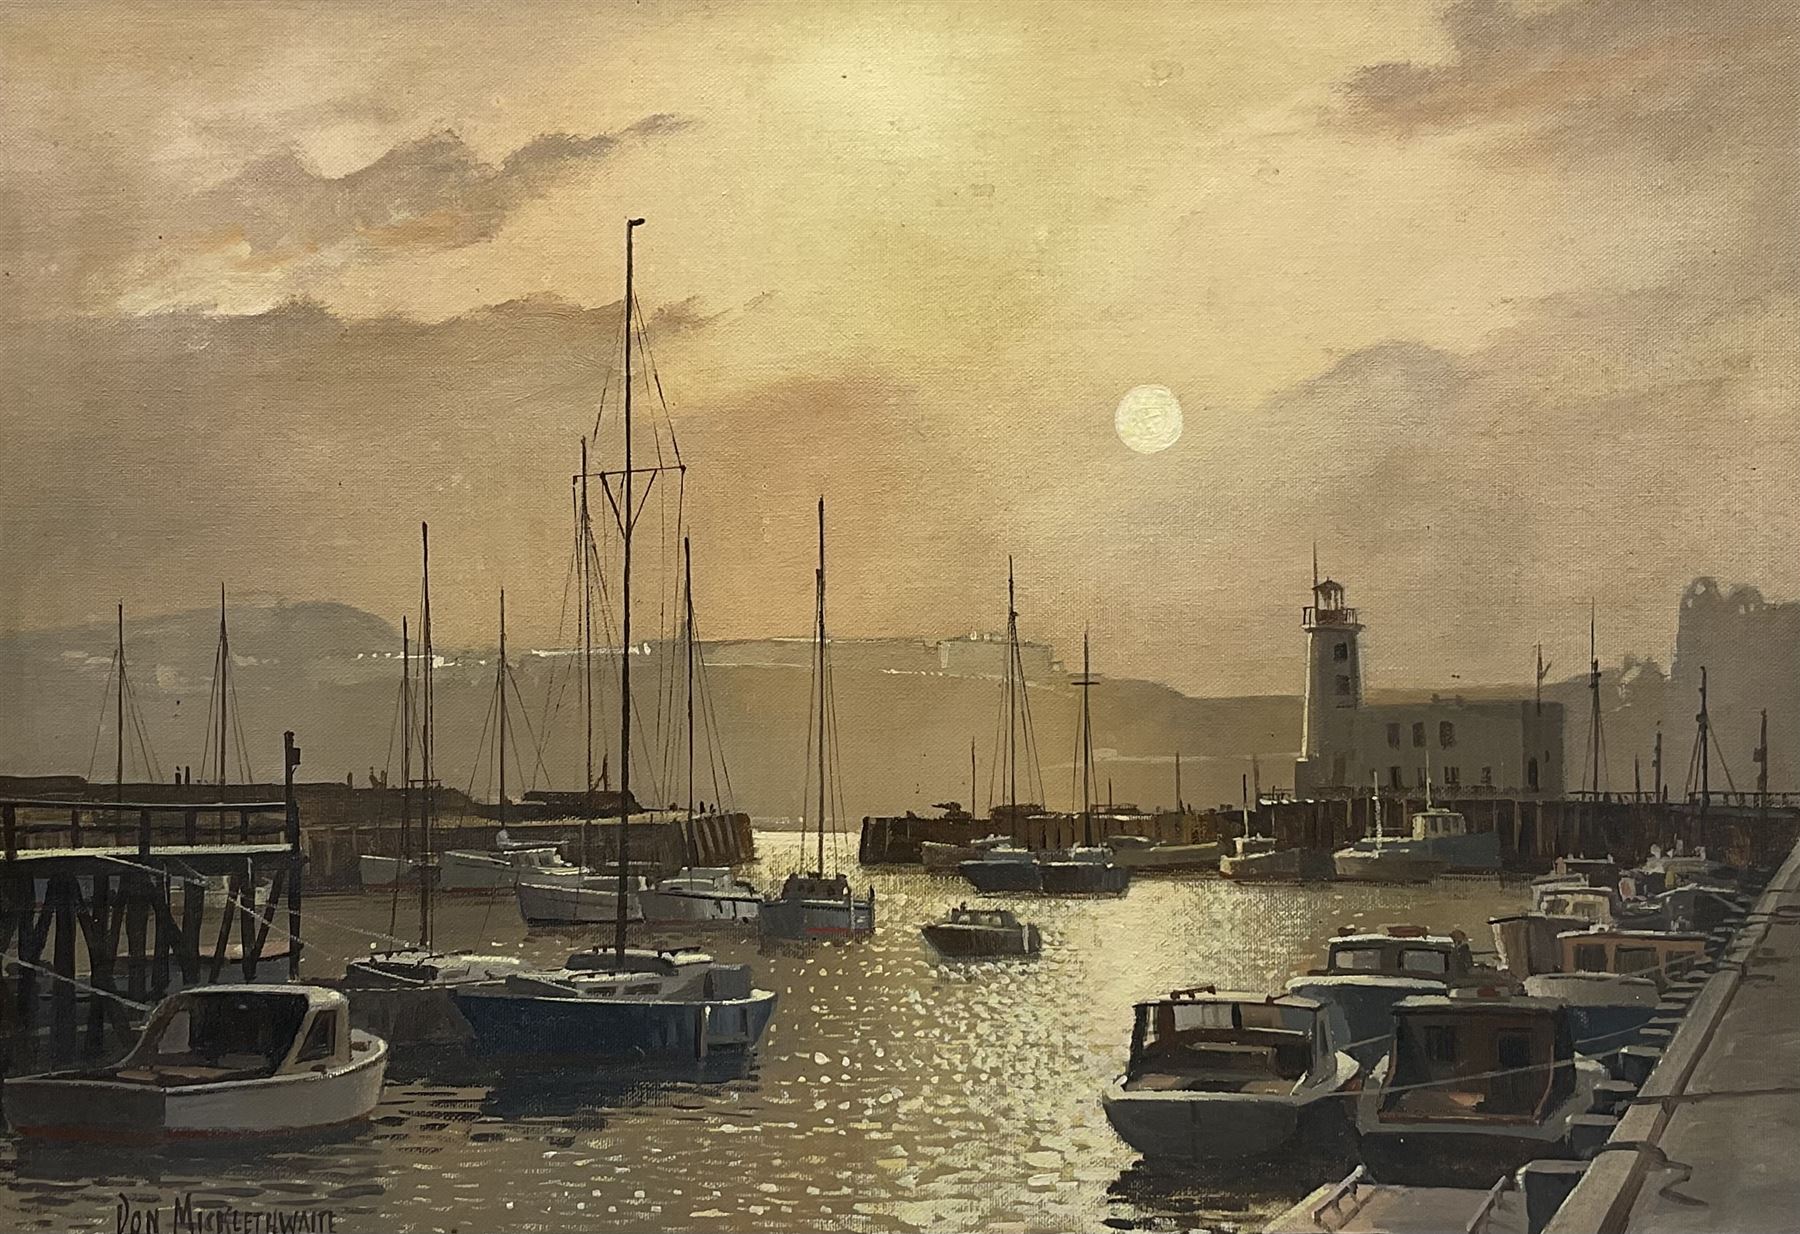 Don Micklethwaite (British 1936-): Scarborough Harbour at Sunset